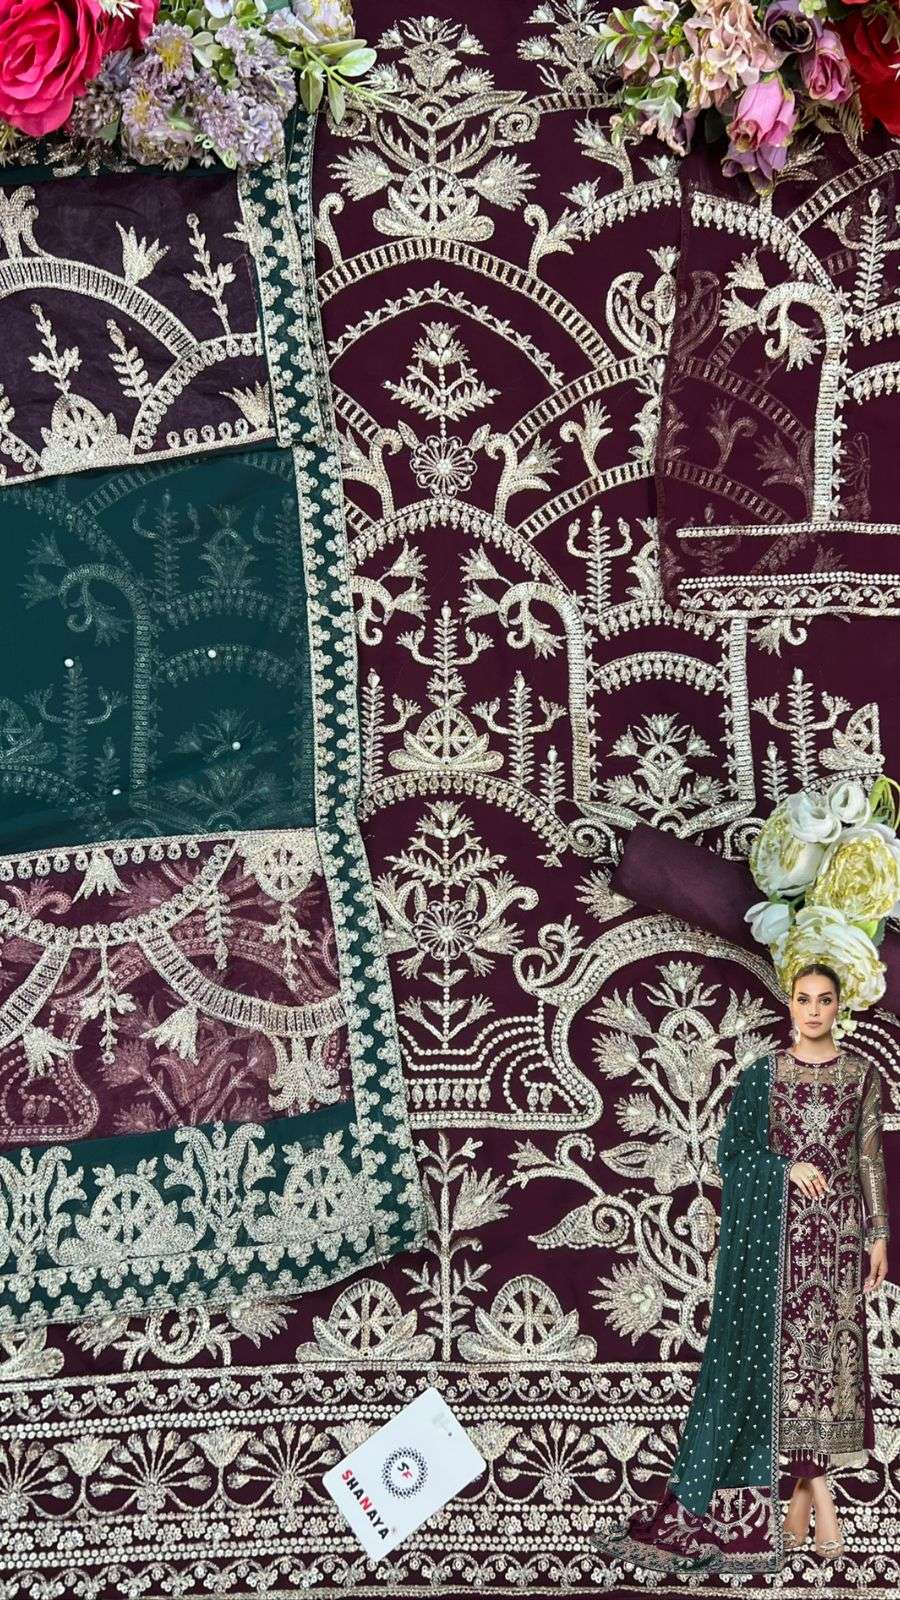 shanaya fashion 132 colour latest designer pakistani salwar suits online wholesaler in surat